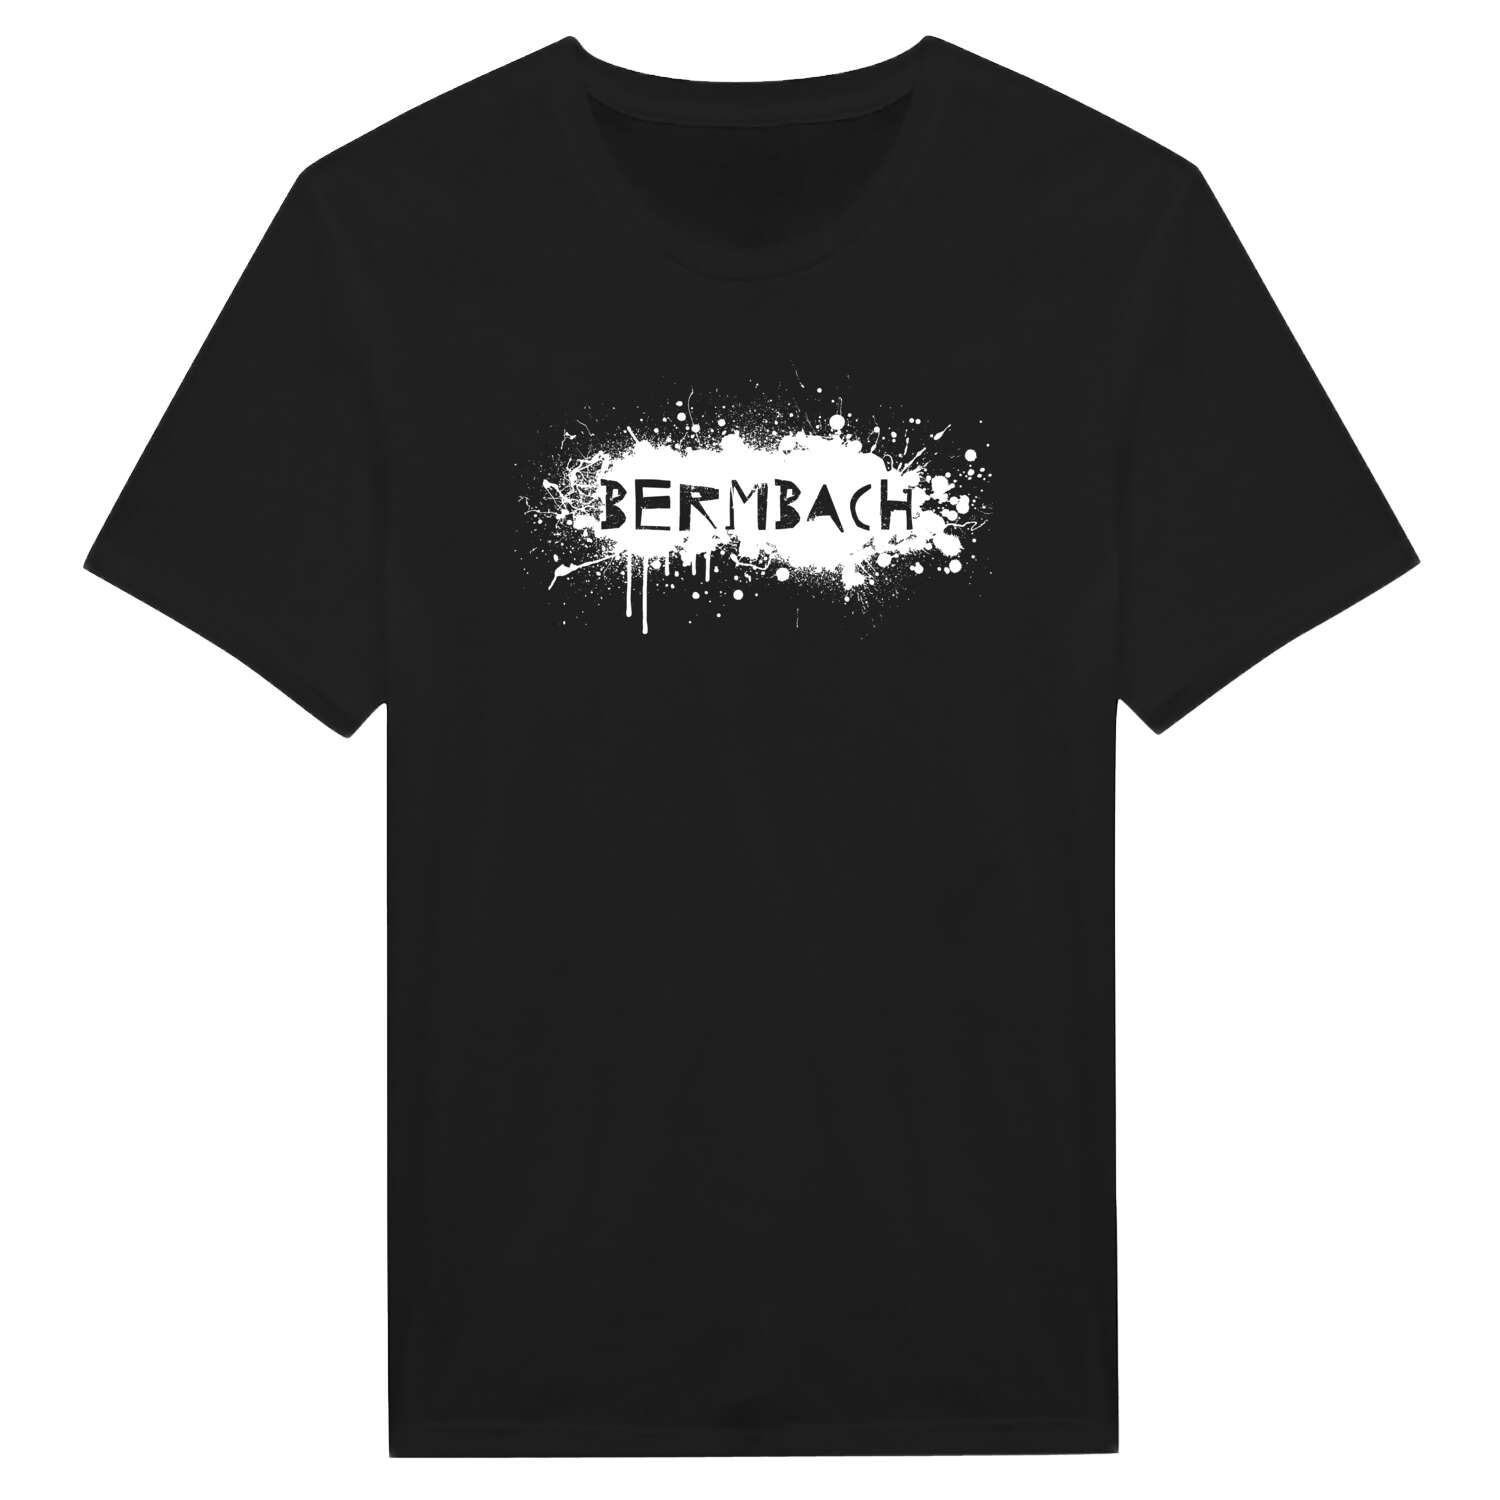 Bermbach T-Shirt »Paint Splash Punk«